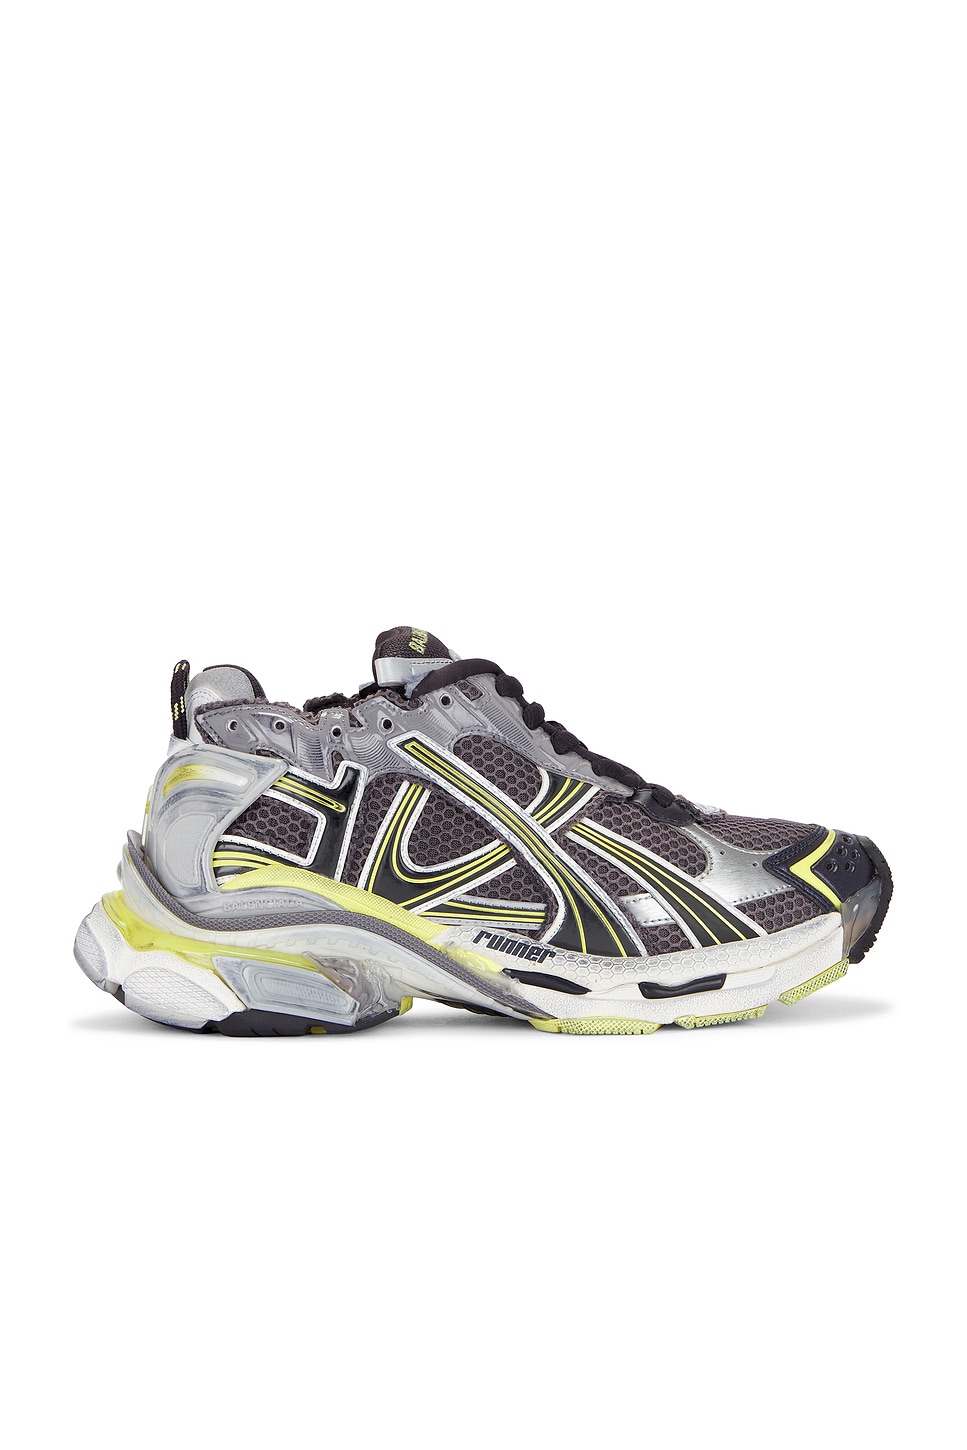 Image 1 of Balenciaga Runner Sneaker in Dark Grey, Yellow, & White